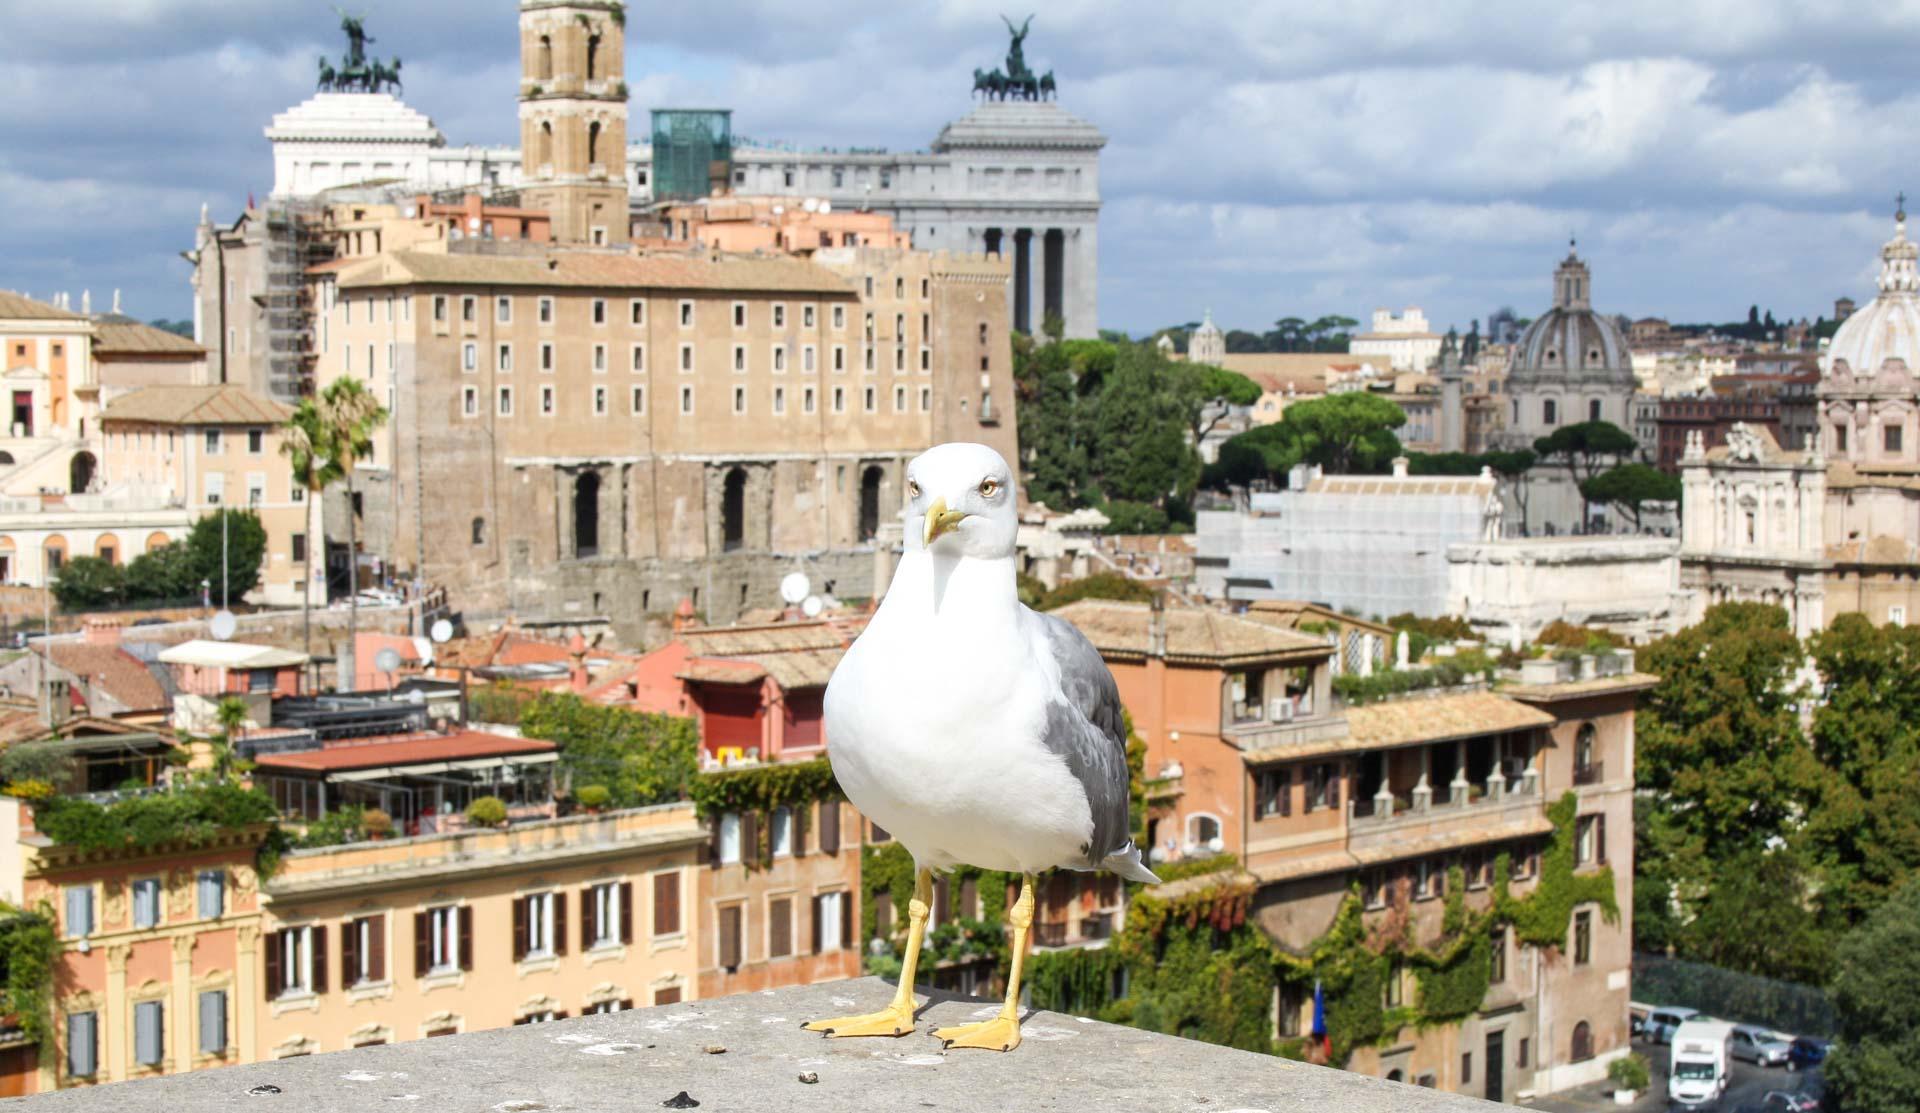 Rome city view